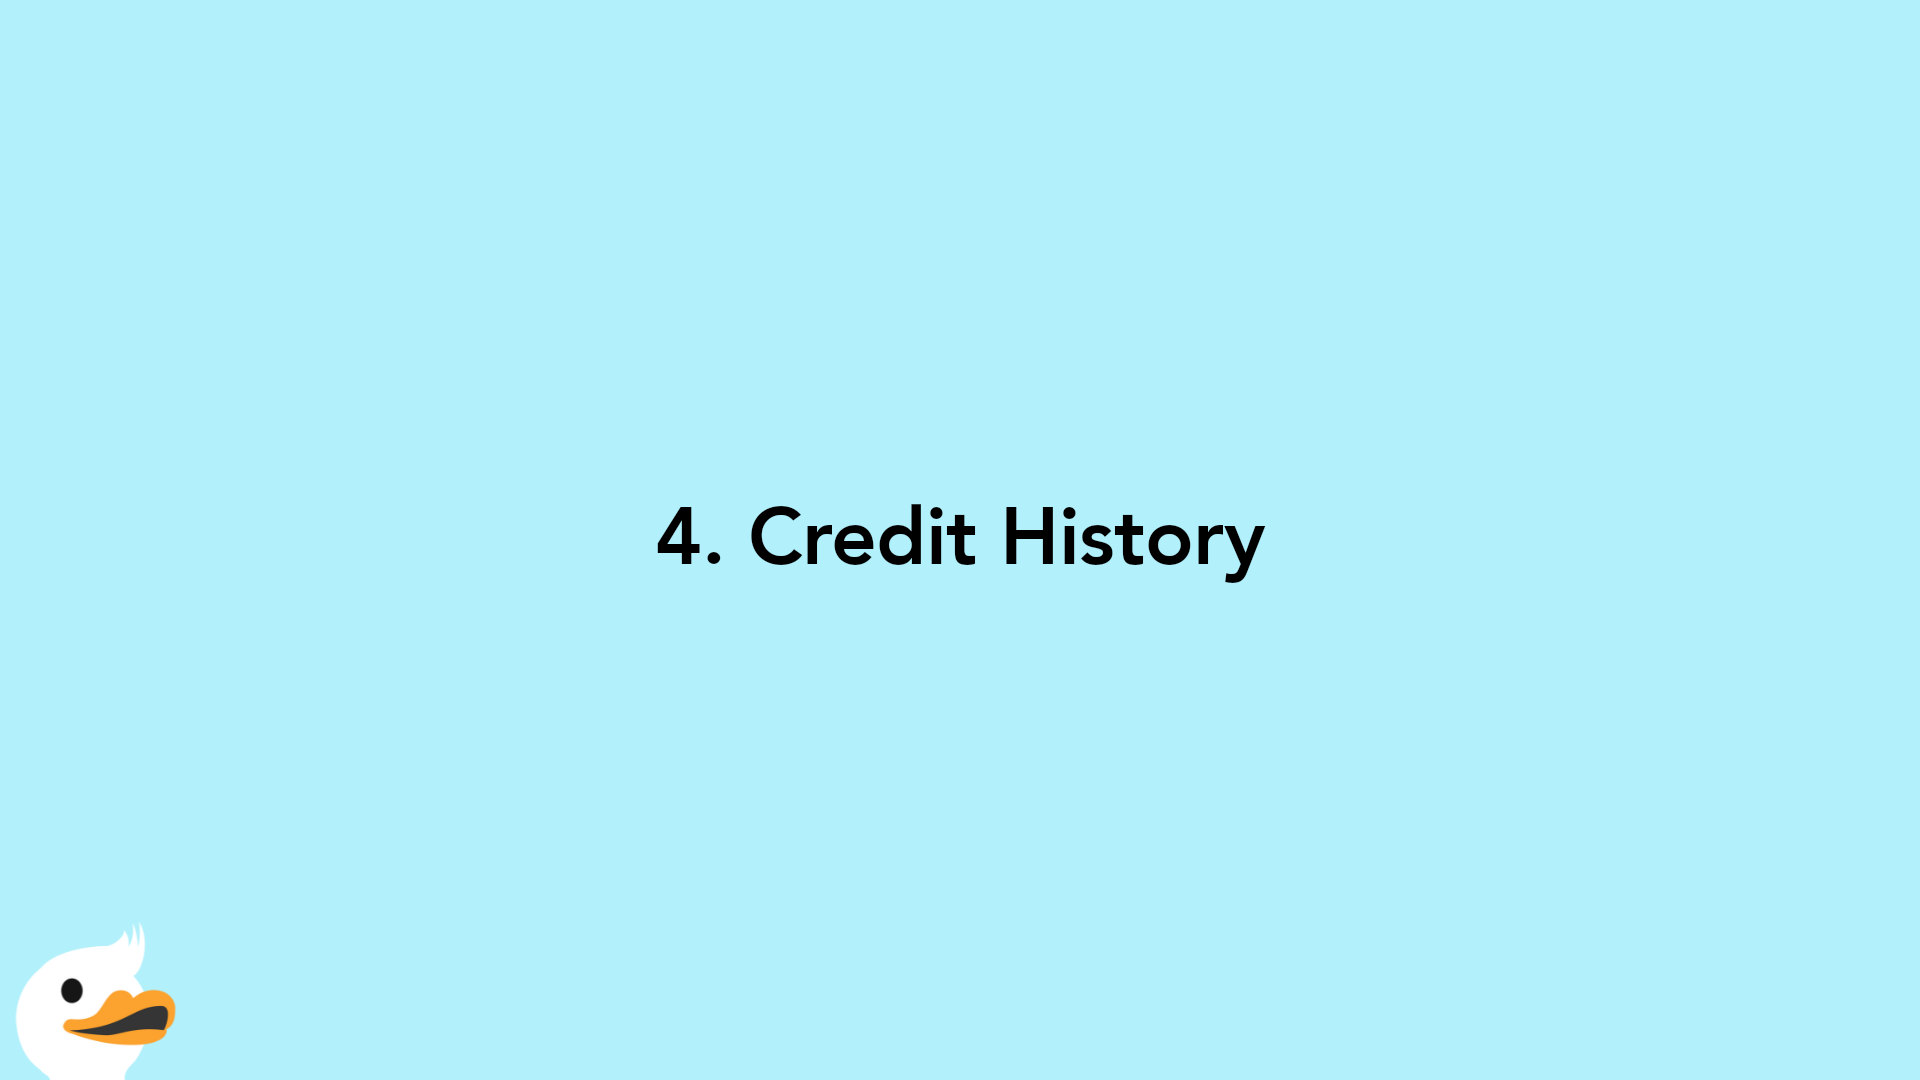 4. Credit History